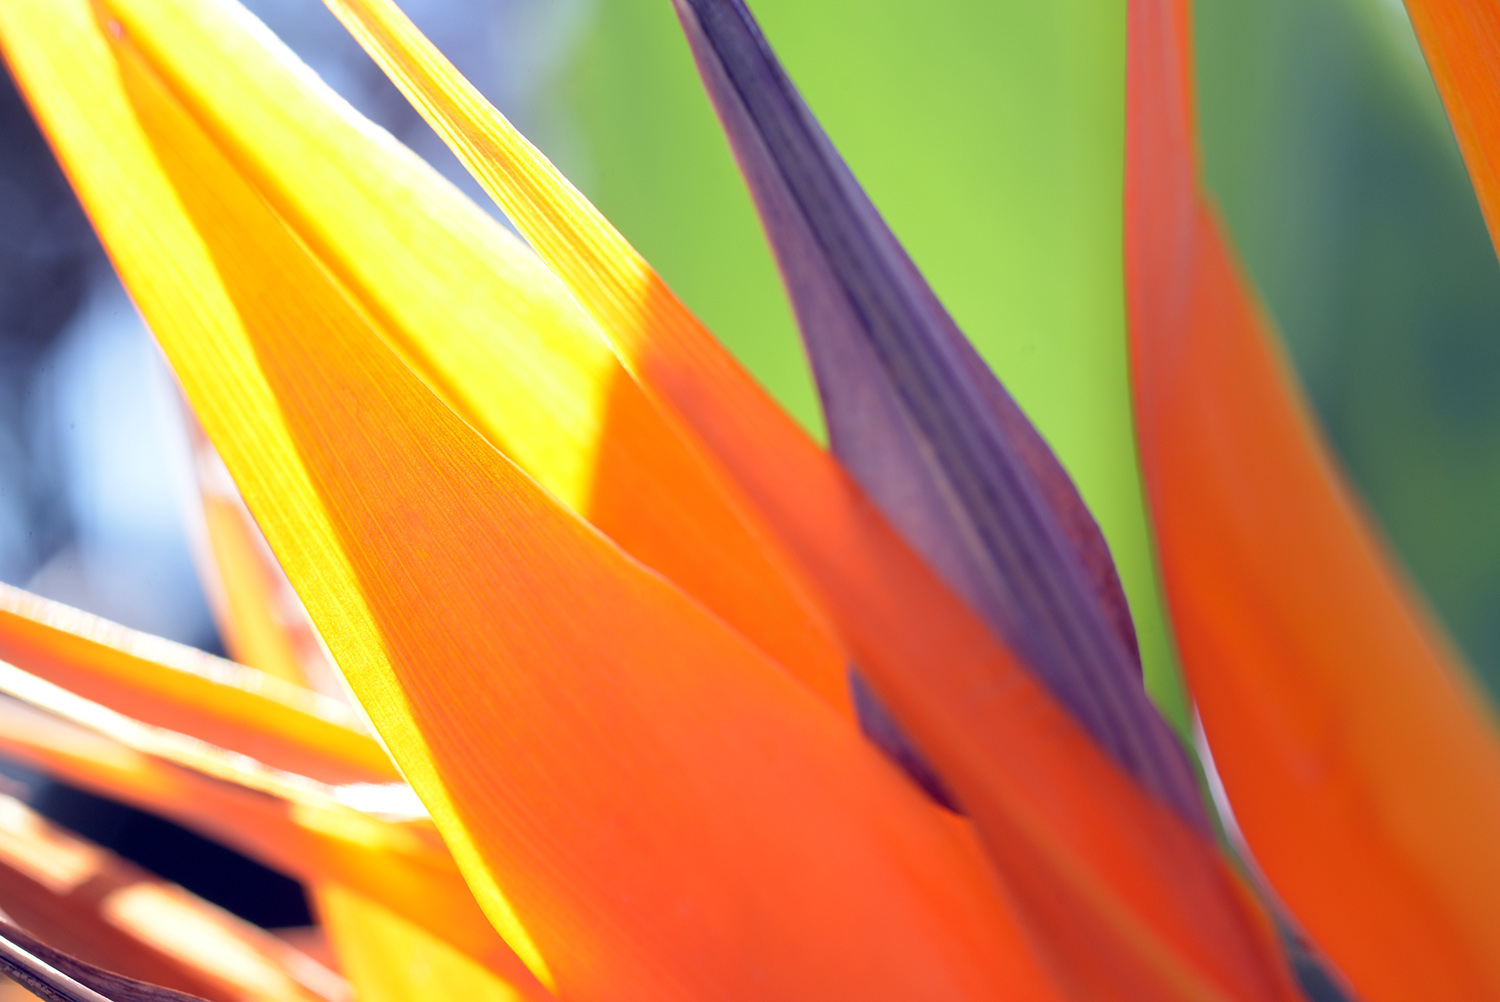 Bird_of_Paradise_Strelitzia_Blossom_Orange_Closeup.jpg